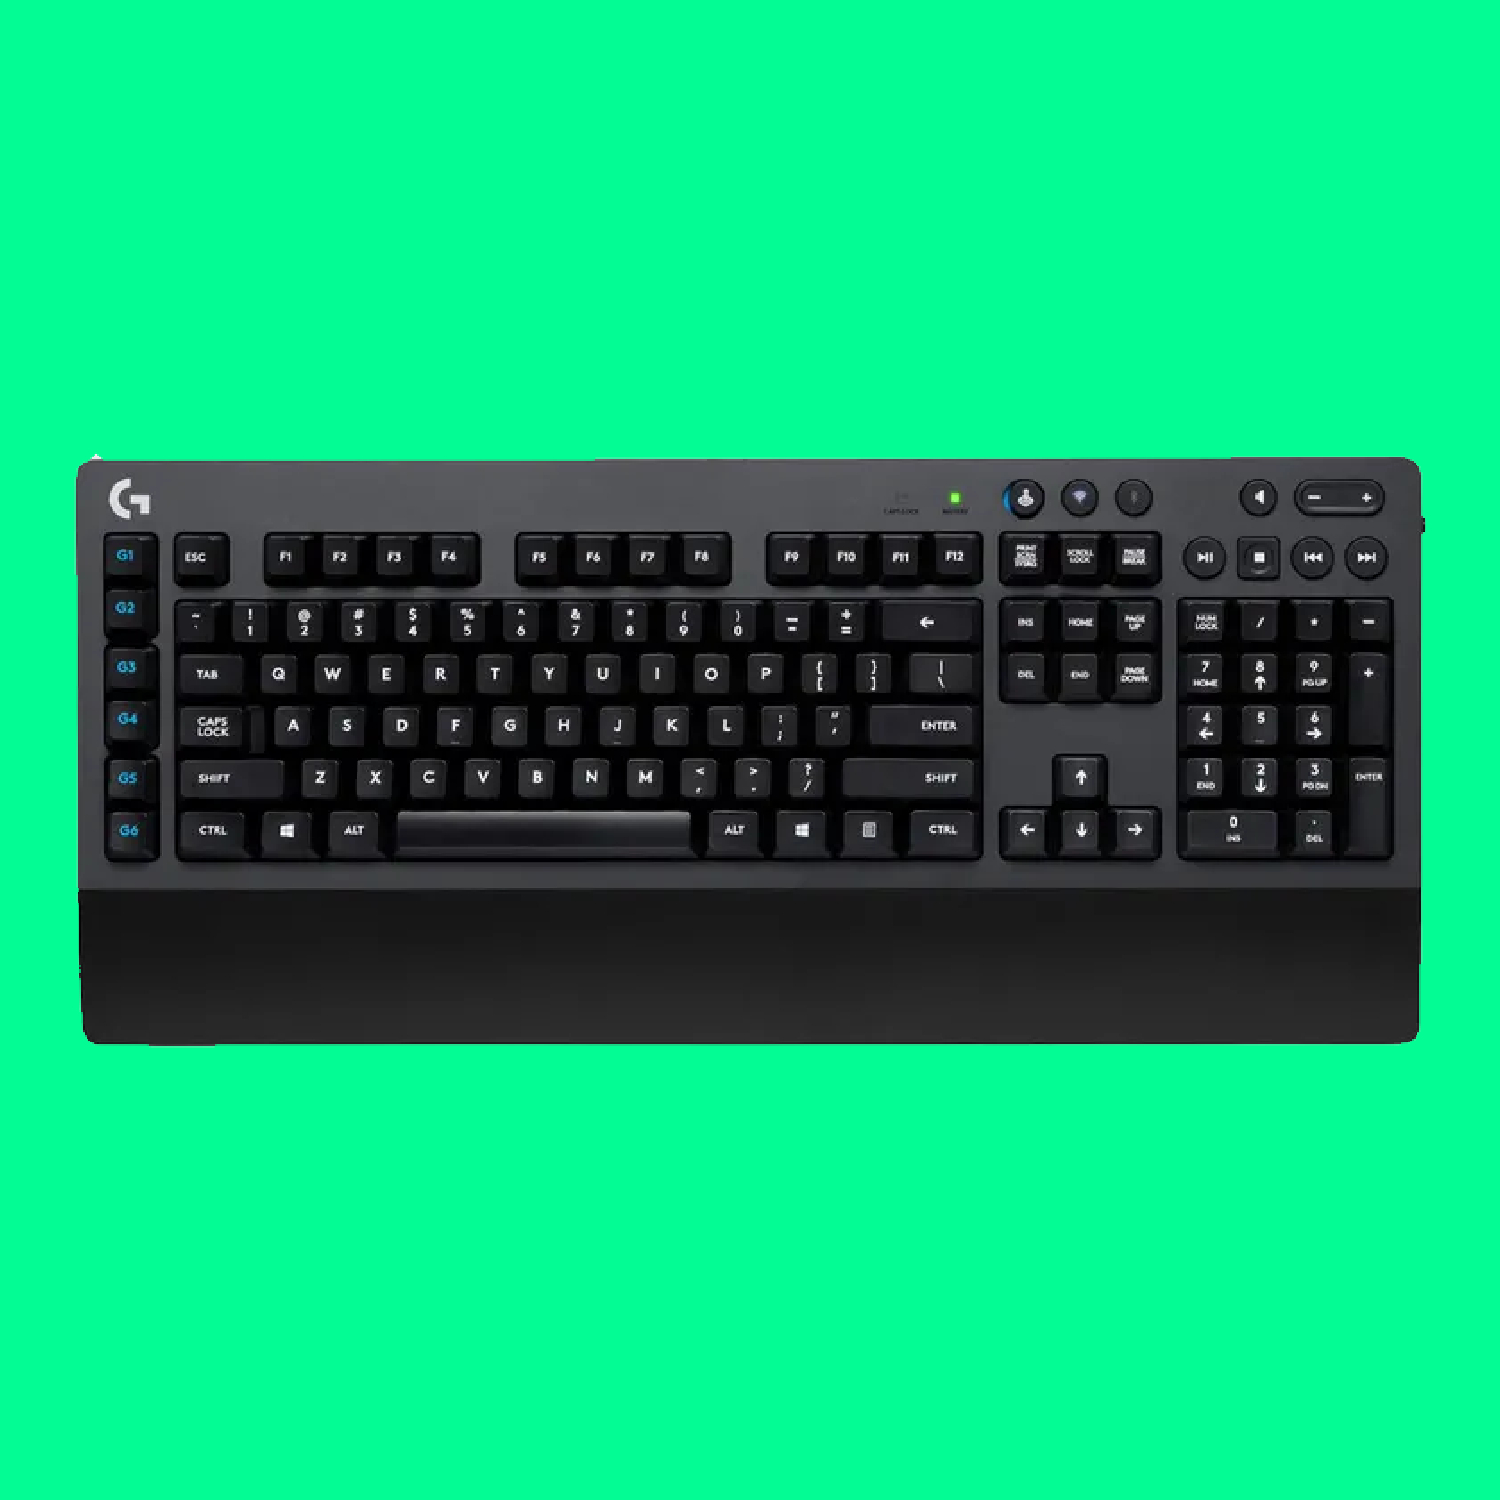 Logitech's latest Pro-branded gaming keyboard is wireless, RGB